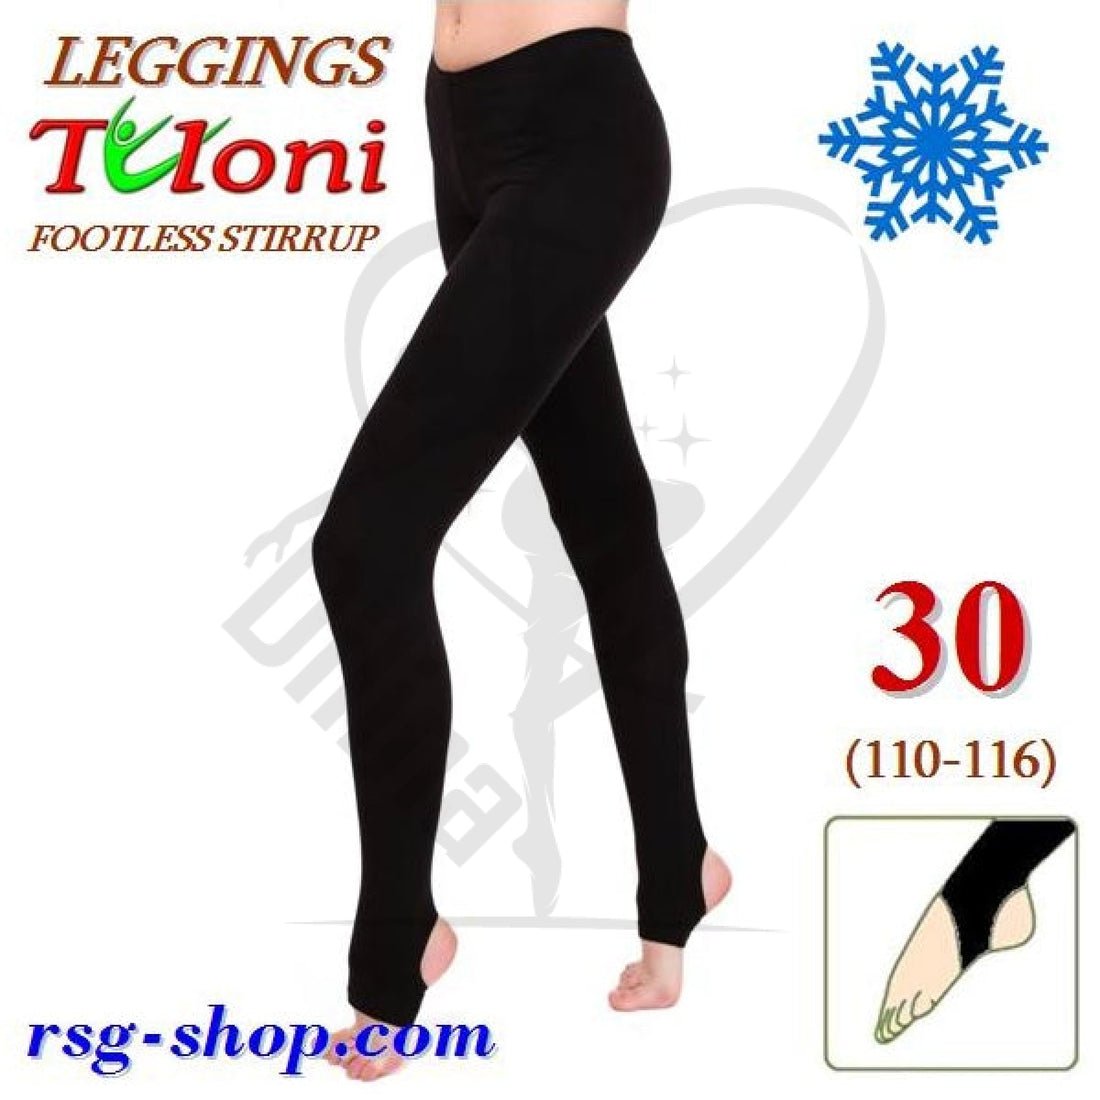 Tuloni Stirrup Winter Leggings 30 (110-116)